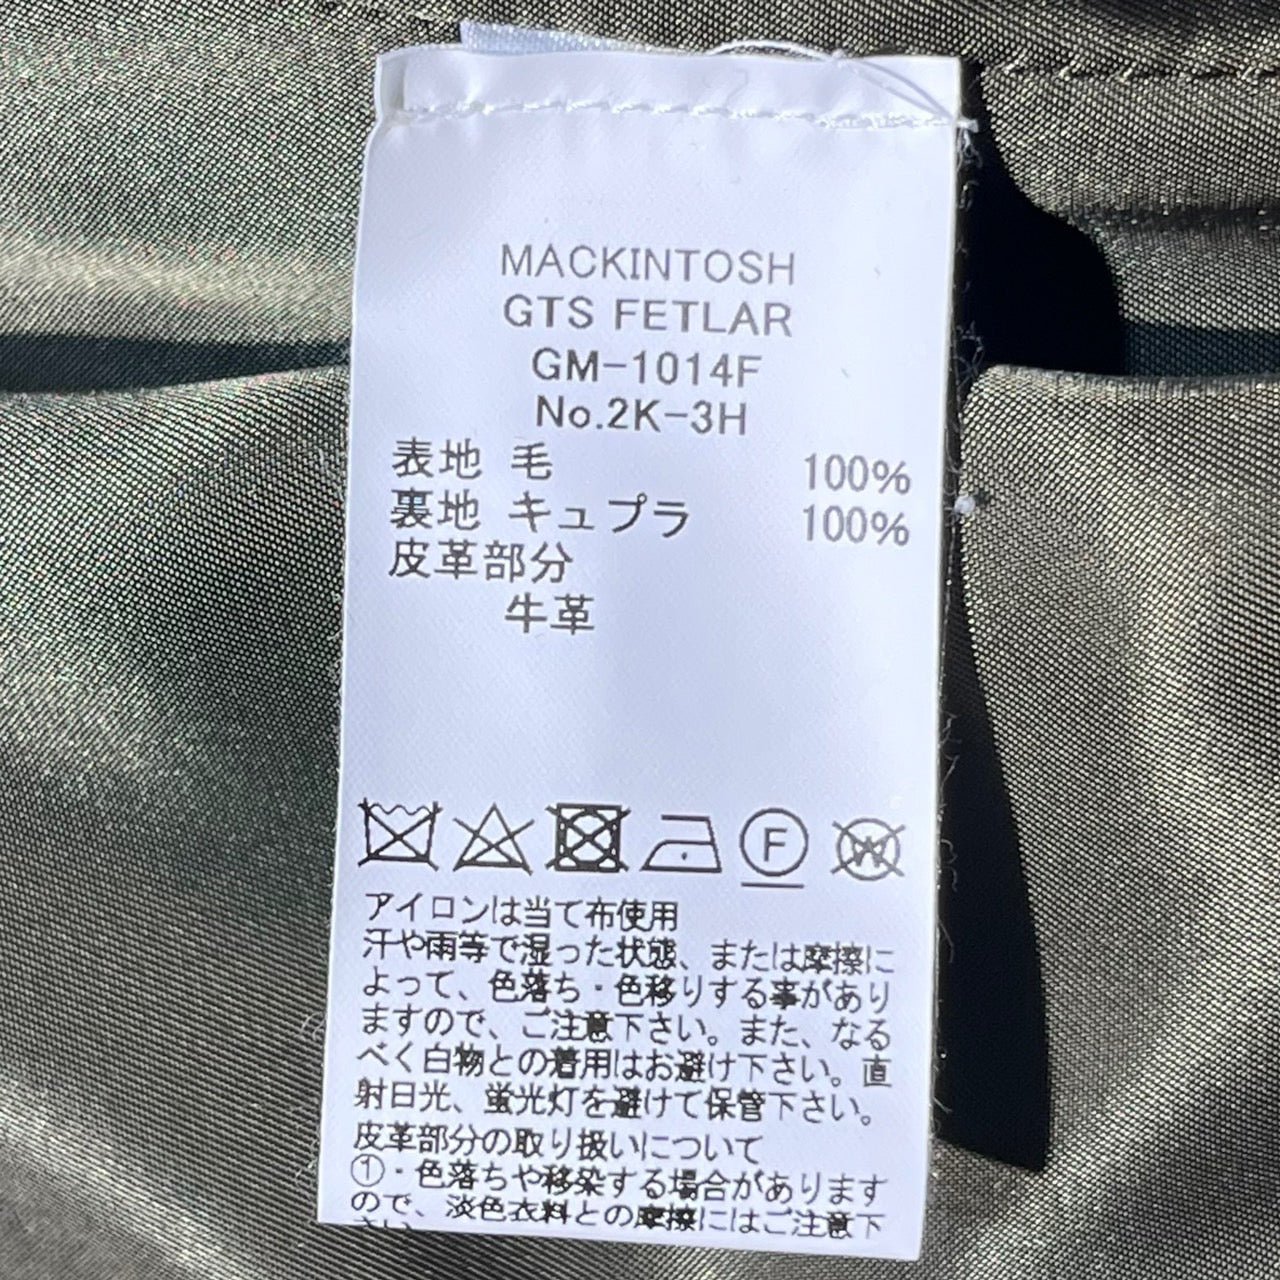 MACKINTOSH(マッキントッシュ) メルトンショートトレンチコート/FETLAR GM-1014F 38(Mサイズ程度) オリーブ 完売品